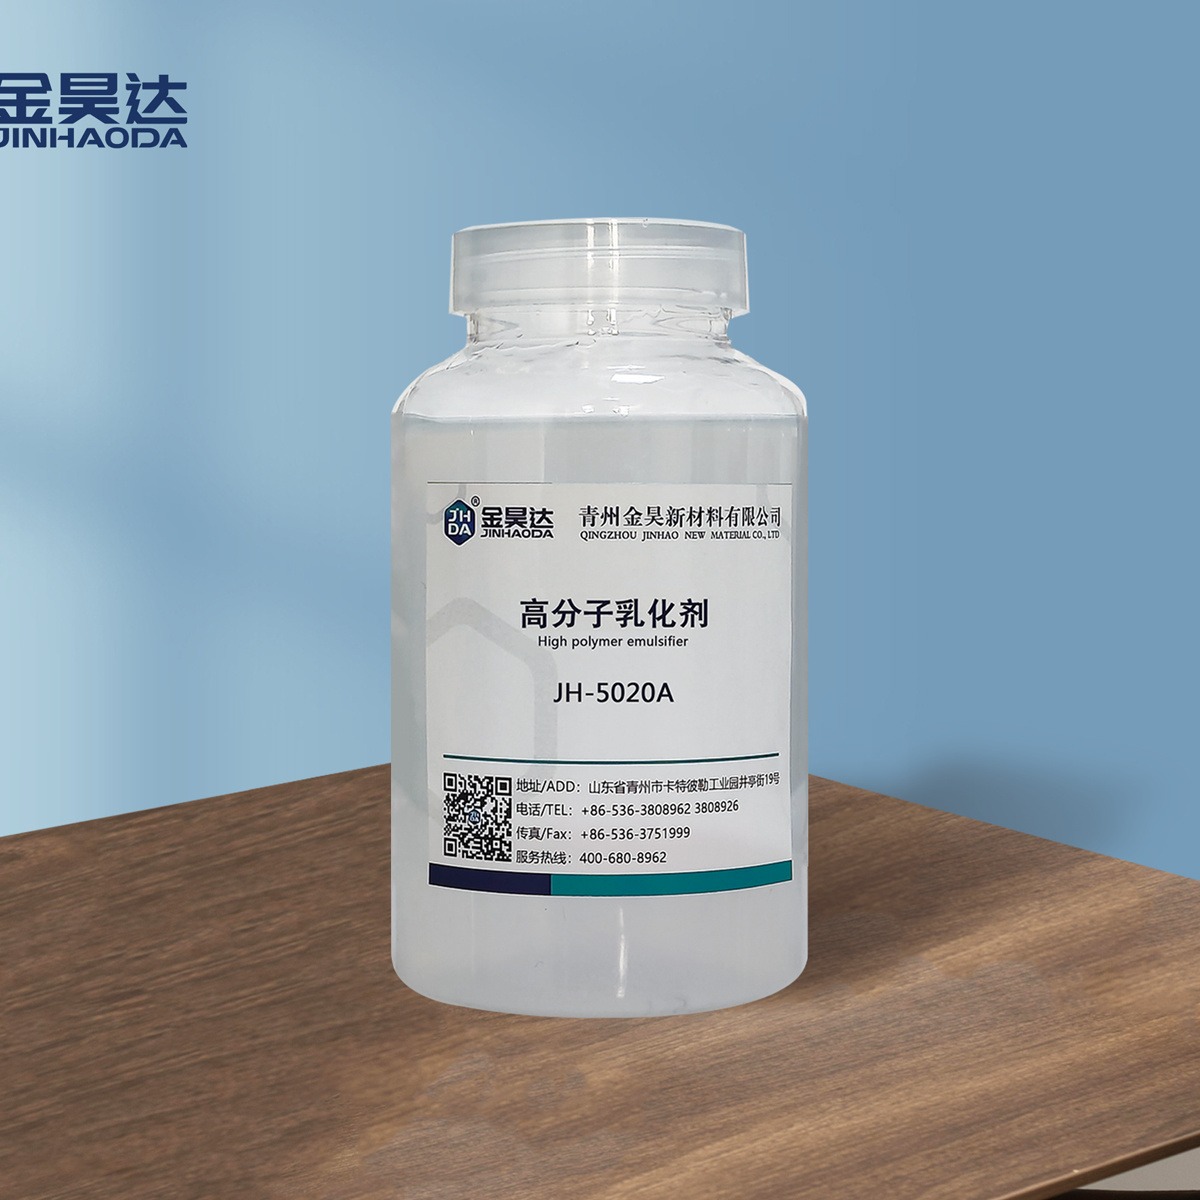 JH-5020A高分子akd乳化剂  金昊化工 高分子乳化剂 AKD乳化剂 专业生产商